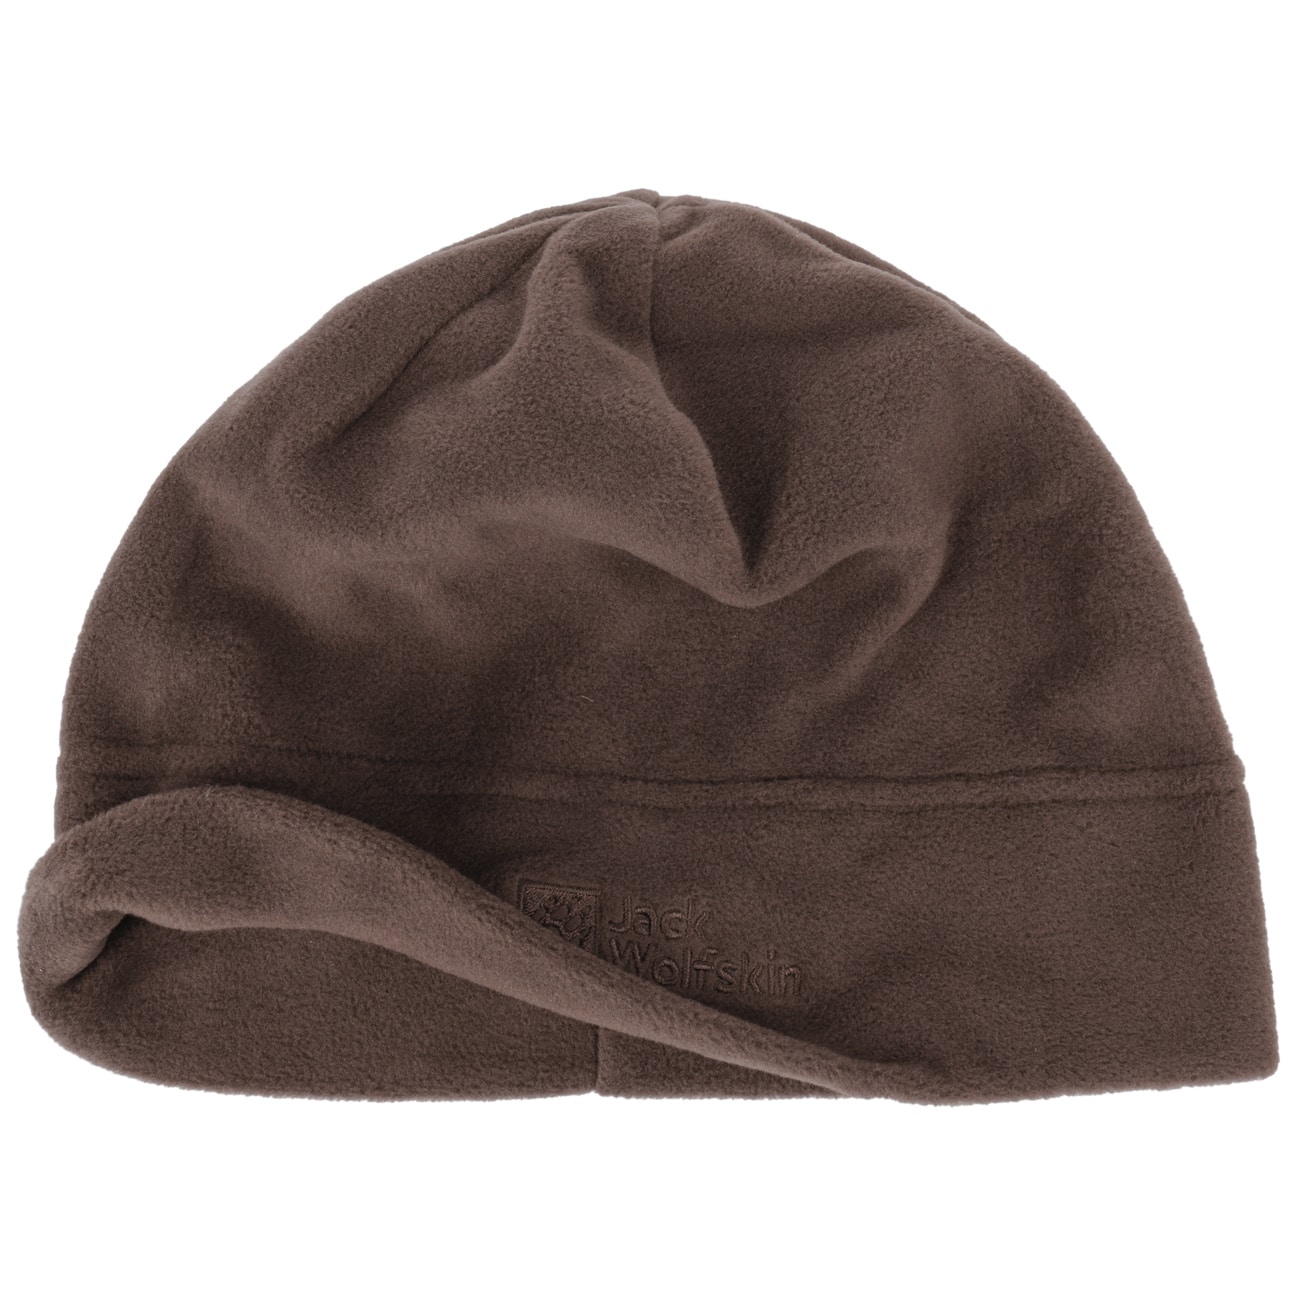 Real Stuff Beanie Hat by online Hatshopping Wolfskin Jack --> Caps Shop ▷ Hats, & Beanies